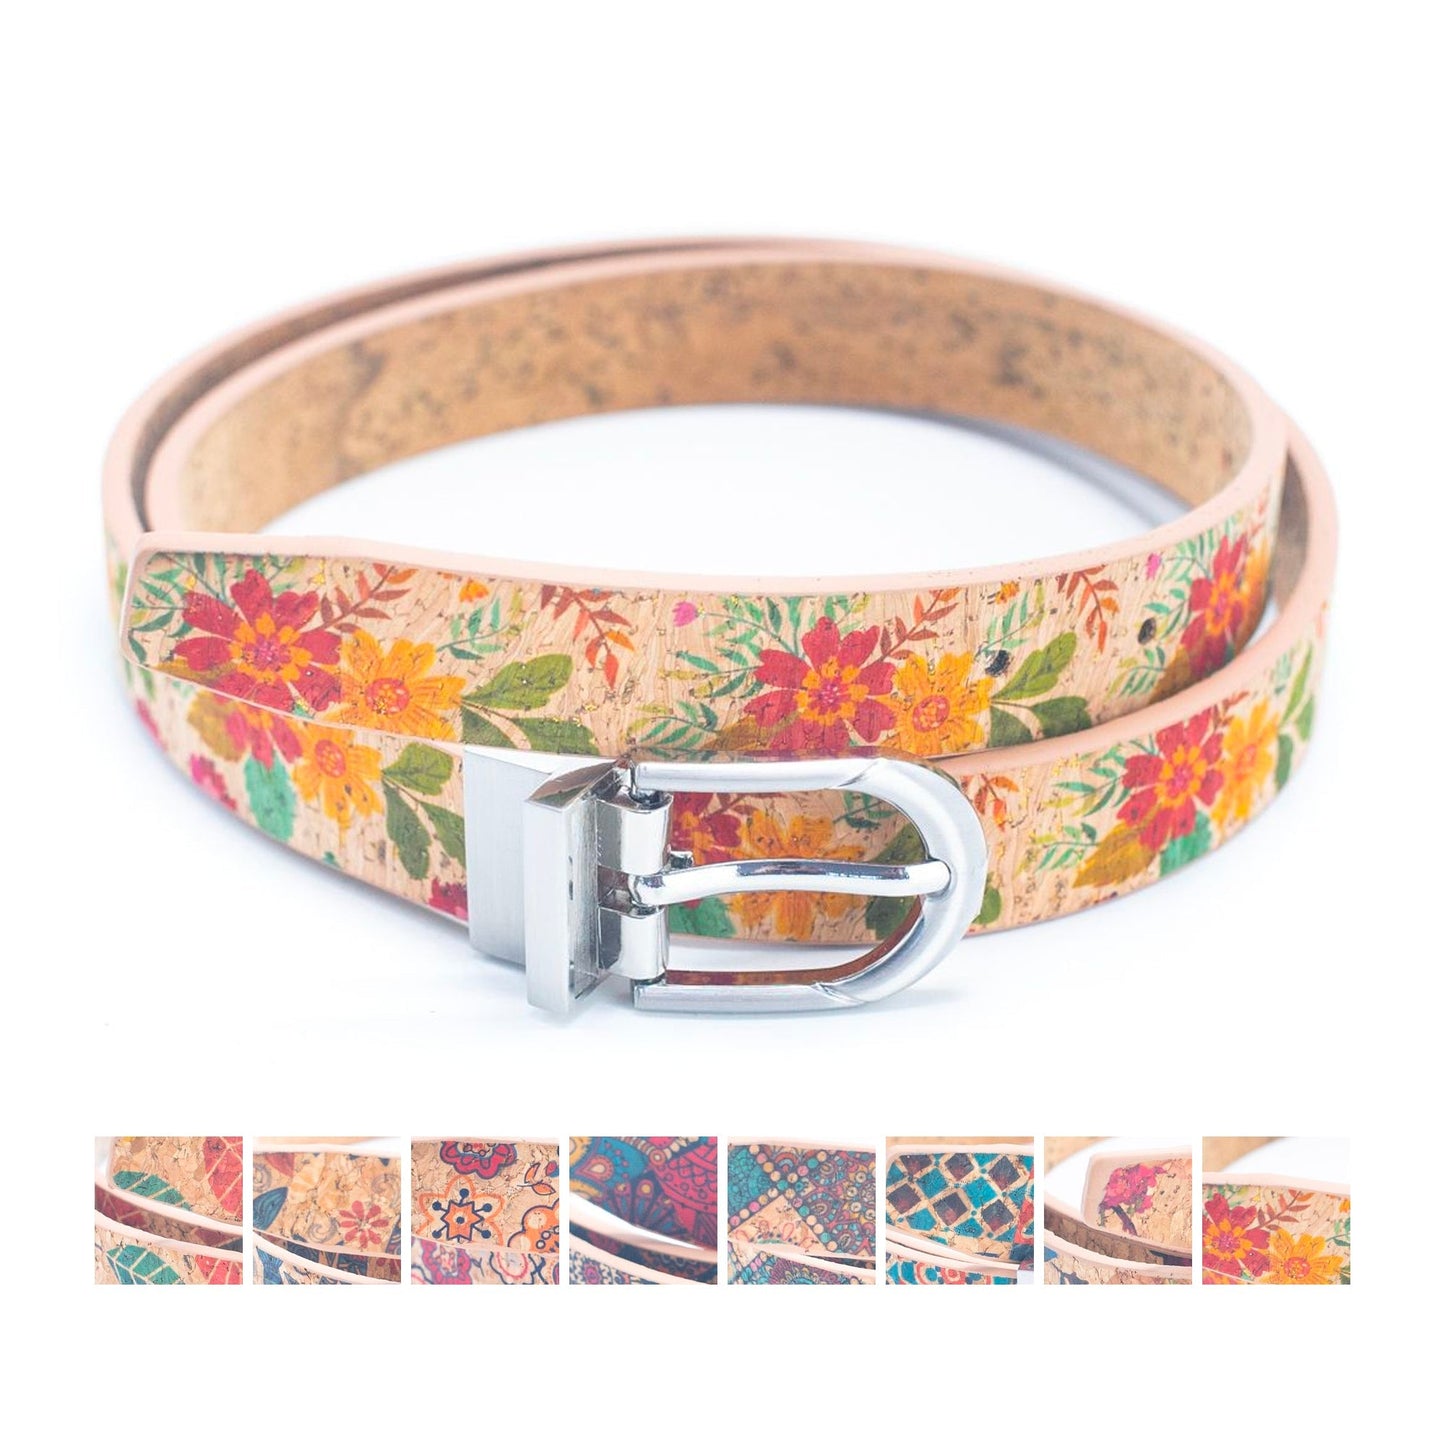 Floral Print Cork Women's Belt w/ Adjustable Buckle | THE CORK COLLECTION